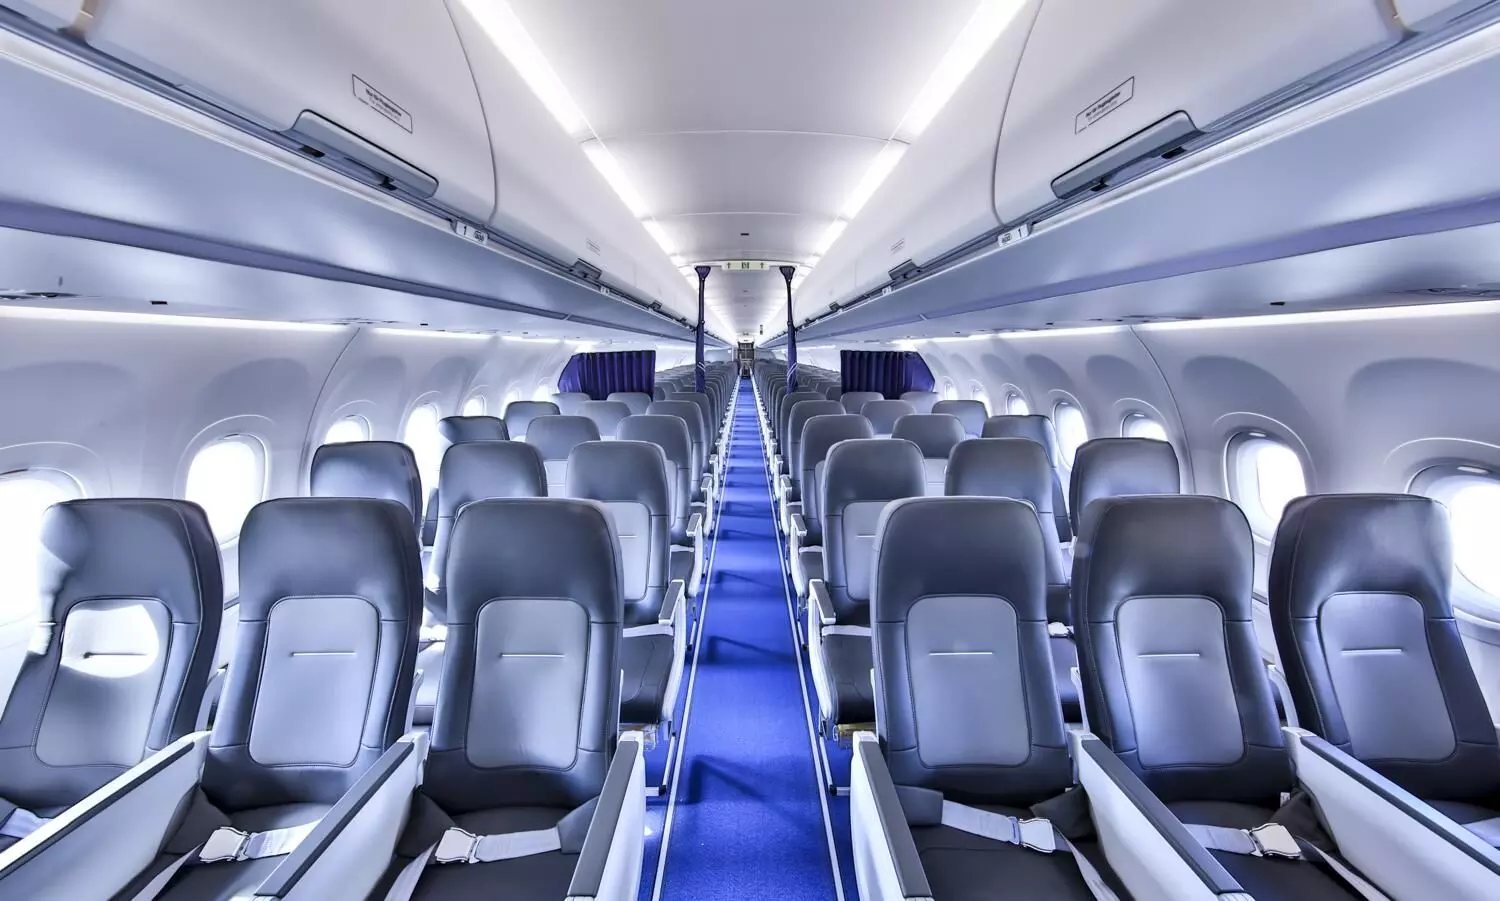 DGCA warns airlines against unserviceable/broken flight seats